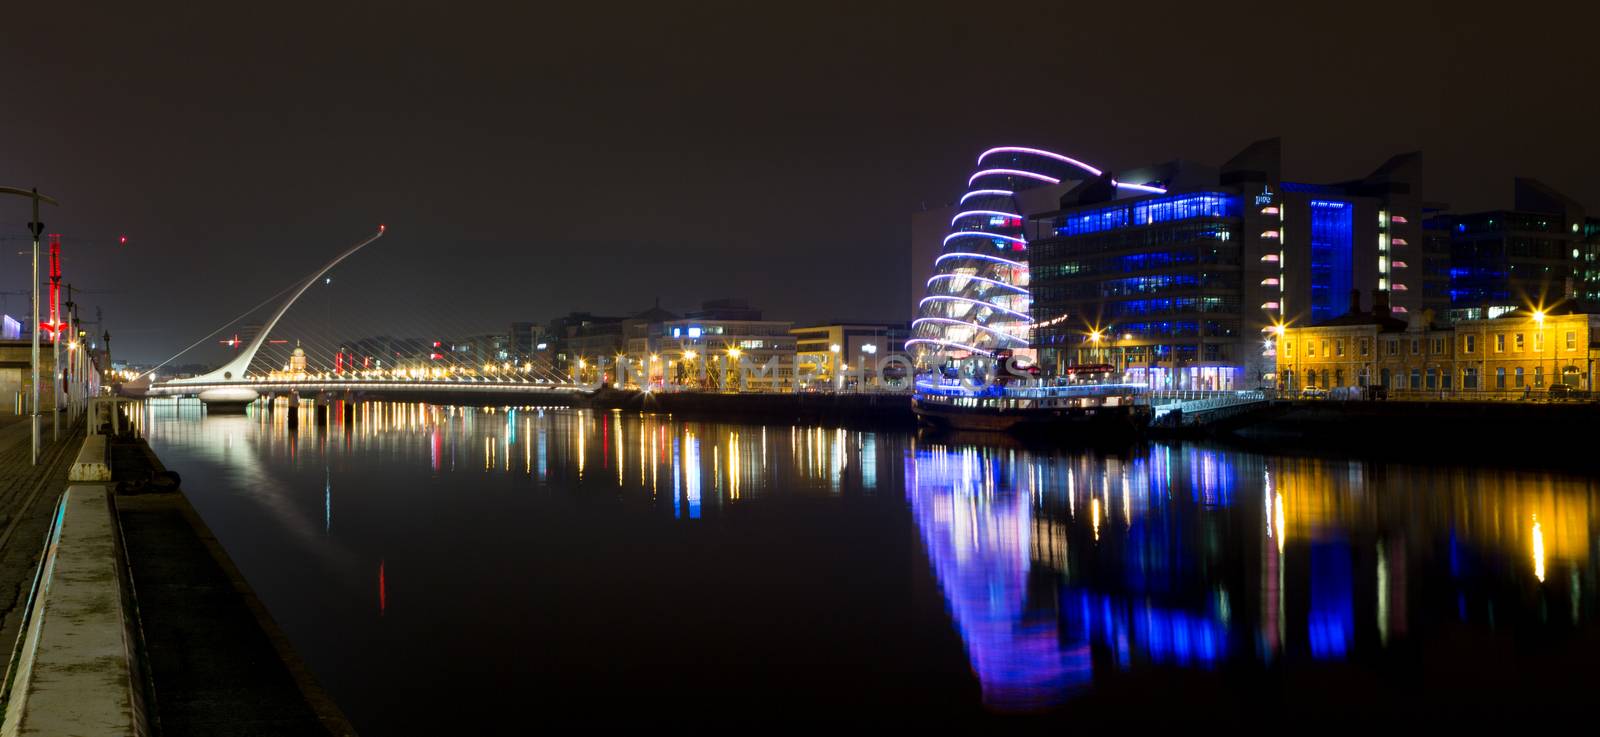 Dublin Ireland River Liffey at Night with harp bridge reflections night